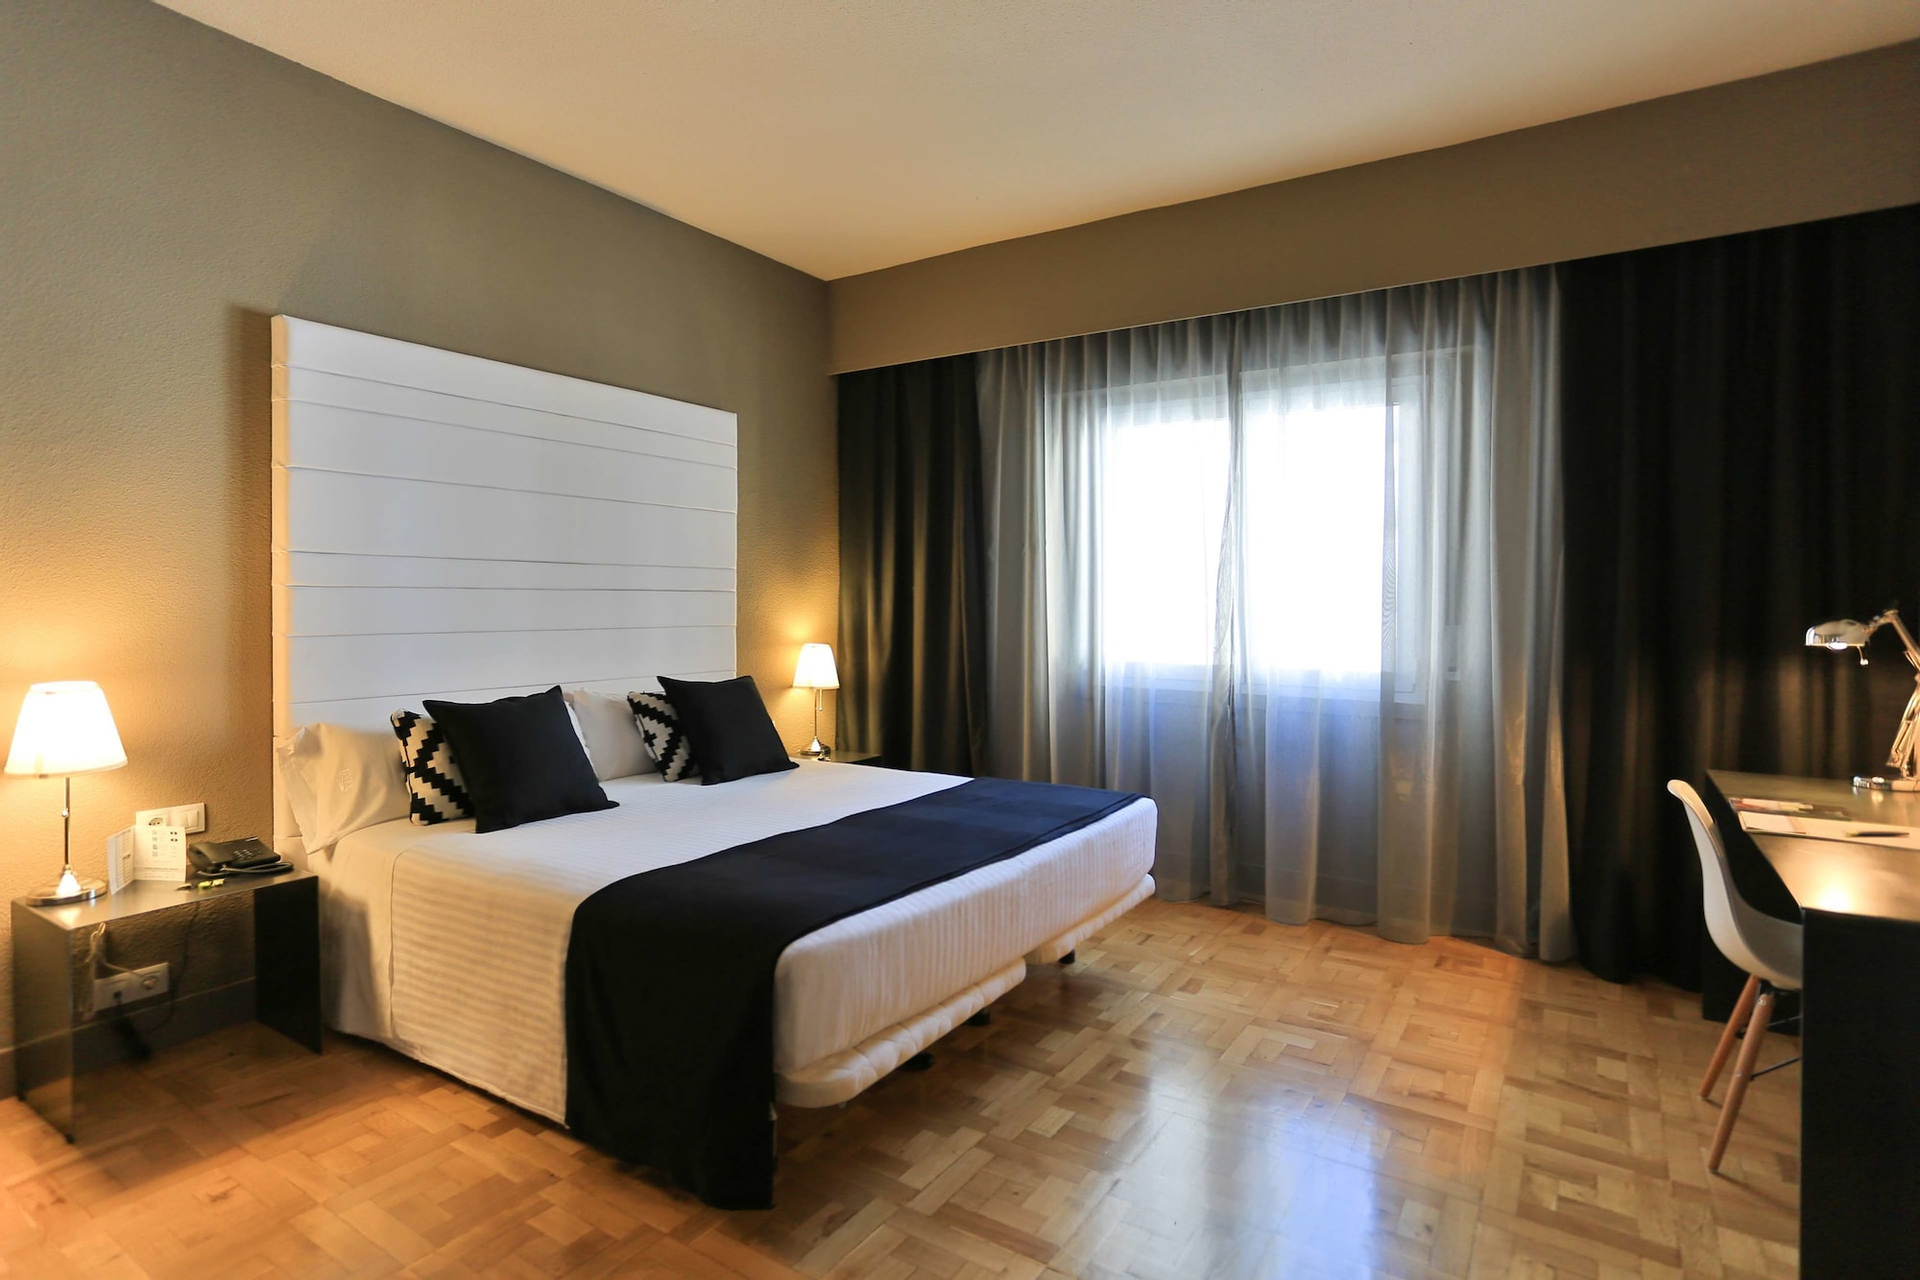 Bedroom 3, Hotel Leyre, Navarra